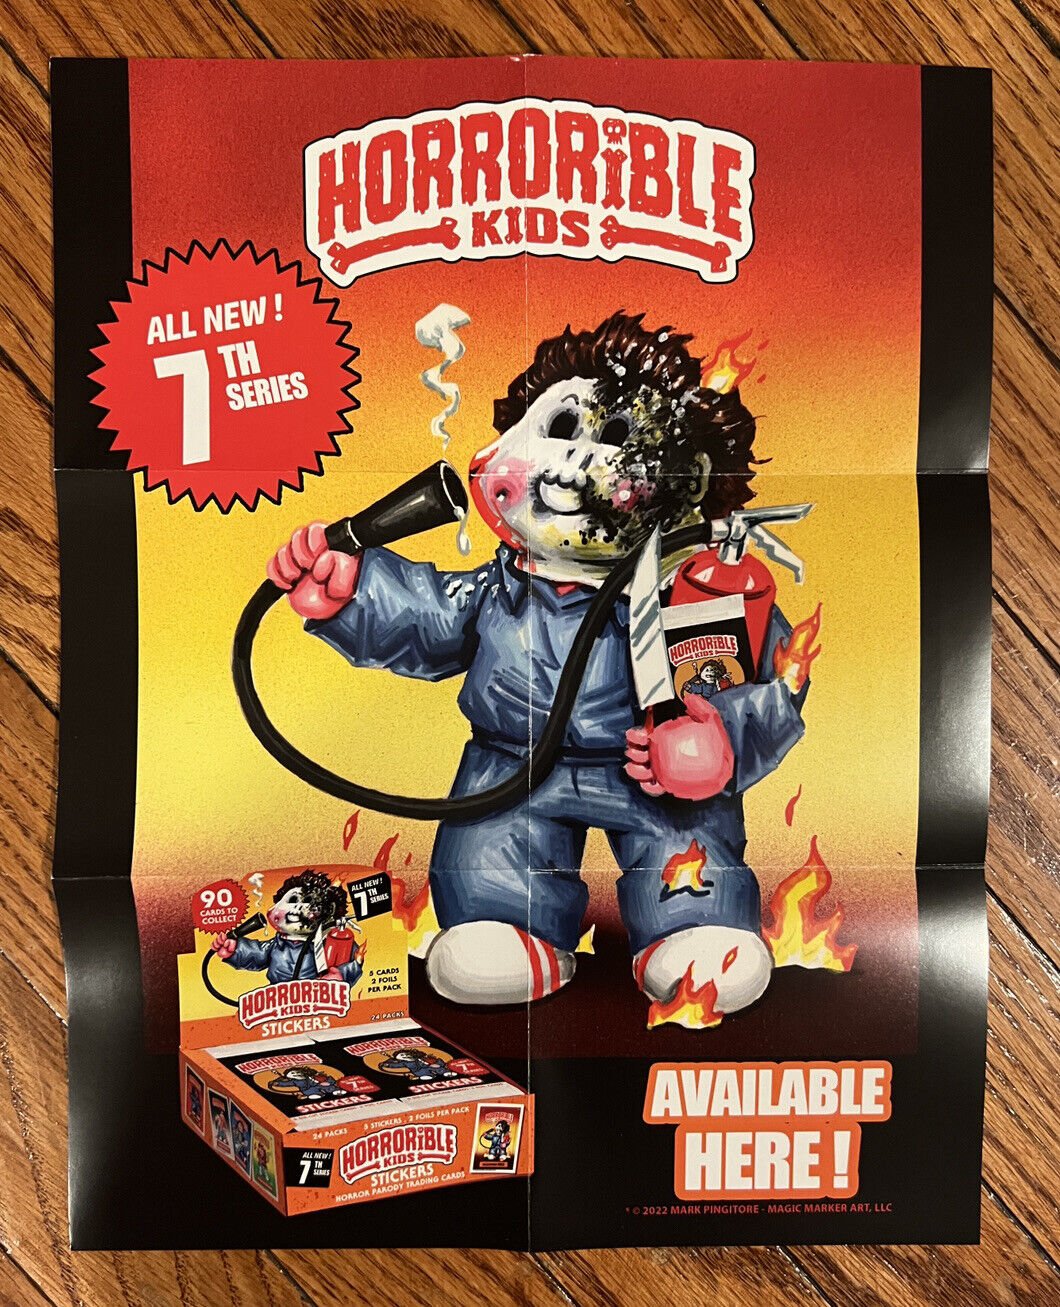 2022 Horrorible Kids 7th Series Poster Mark Pingitore